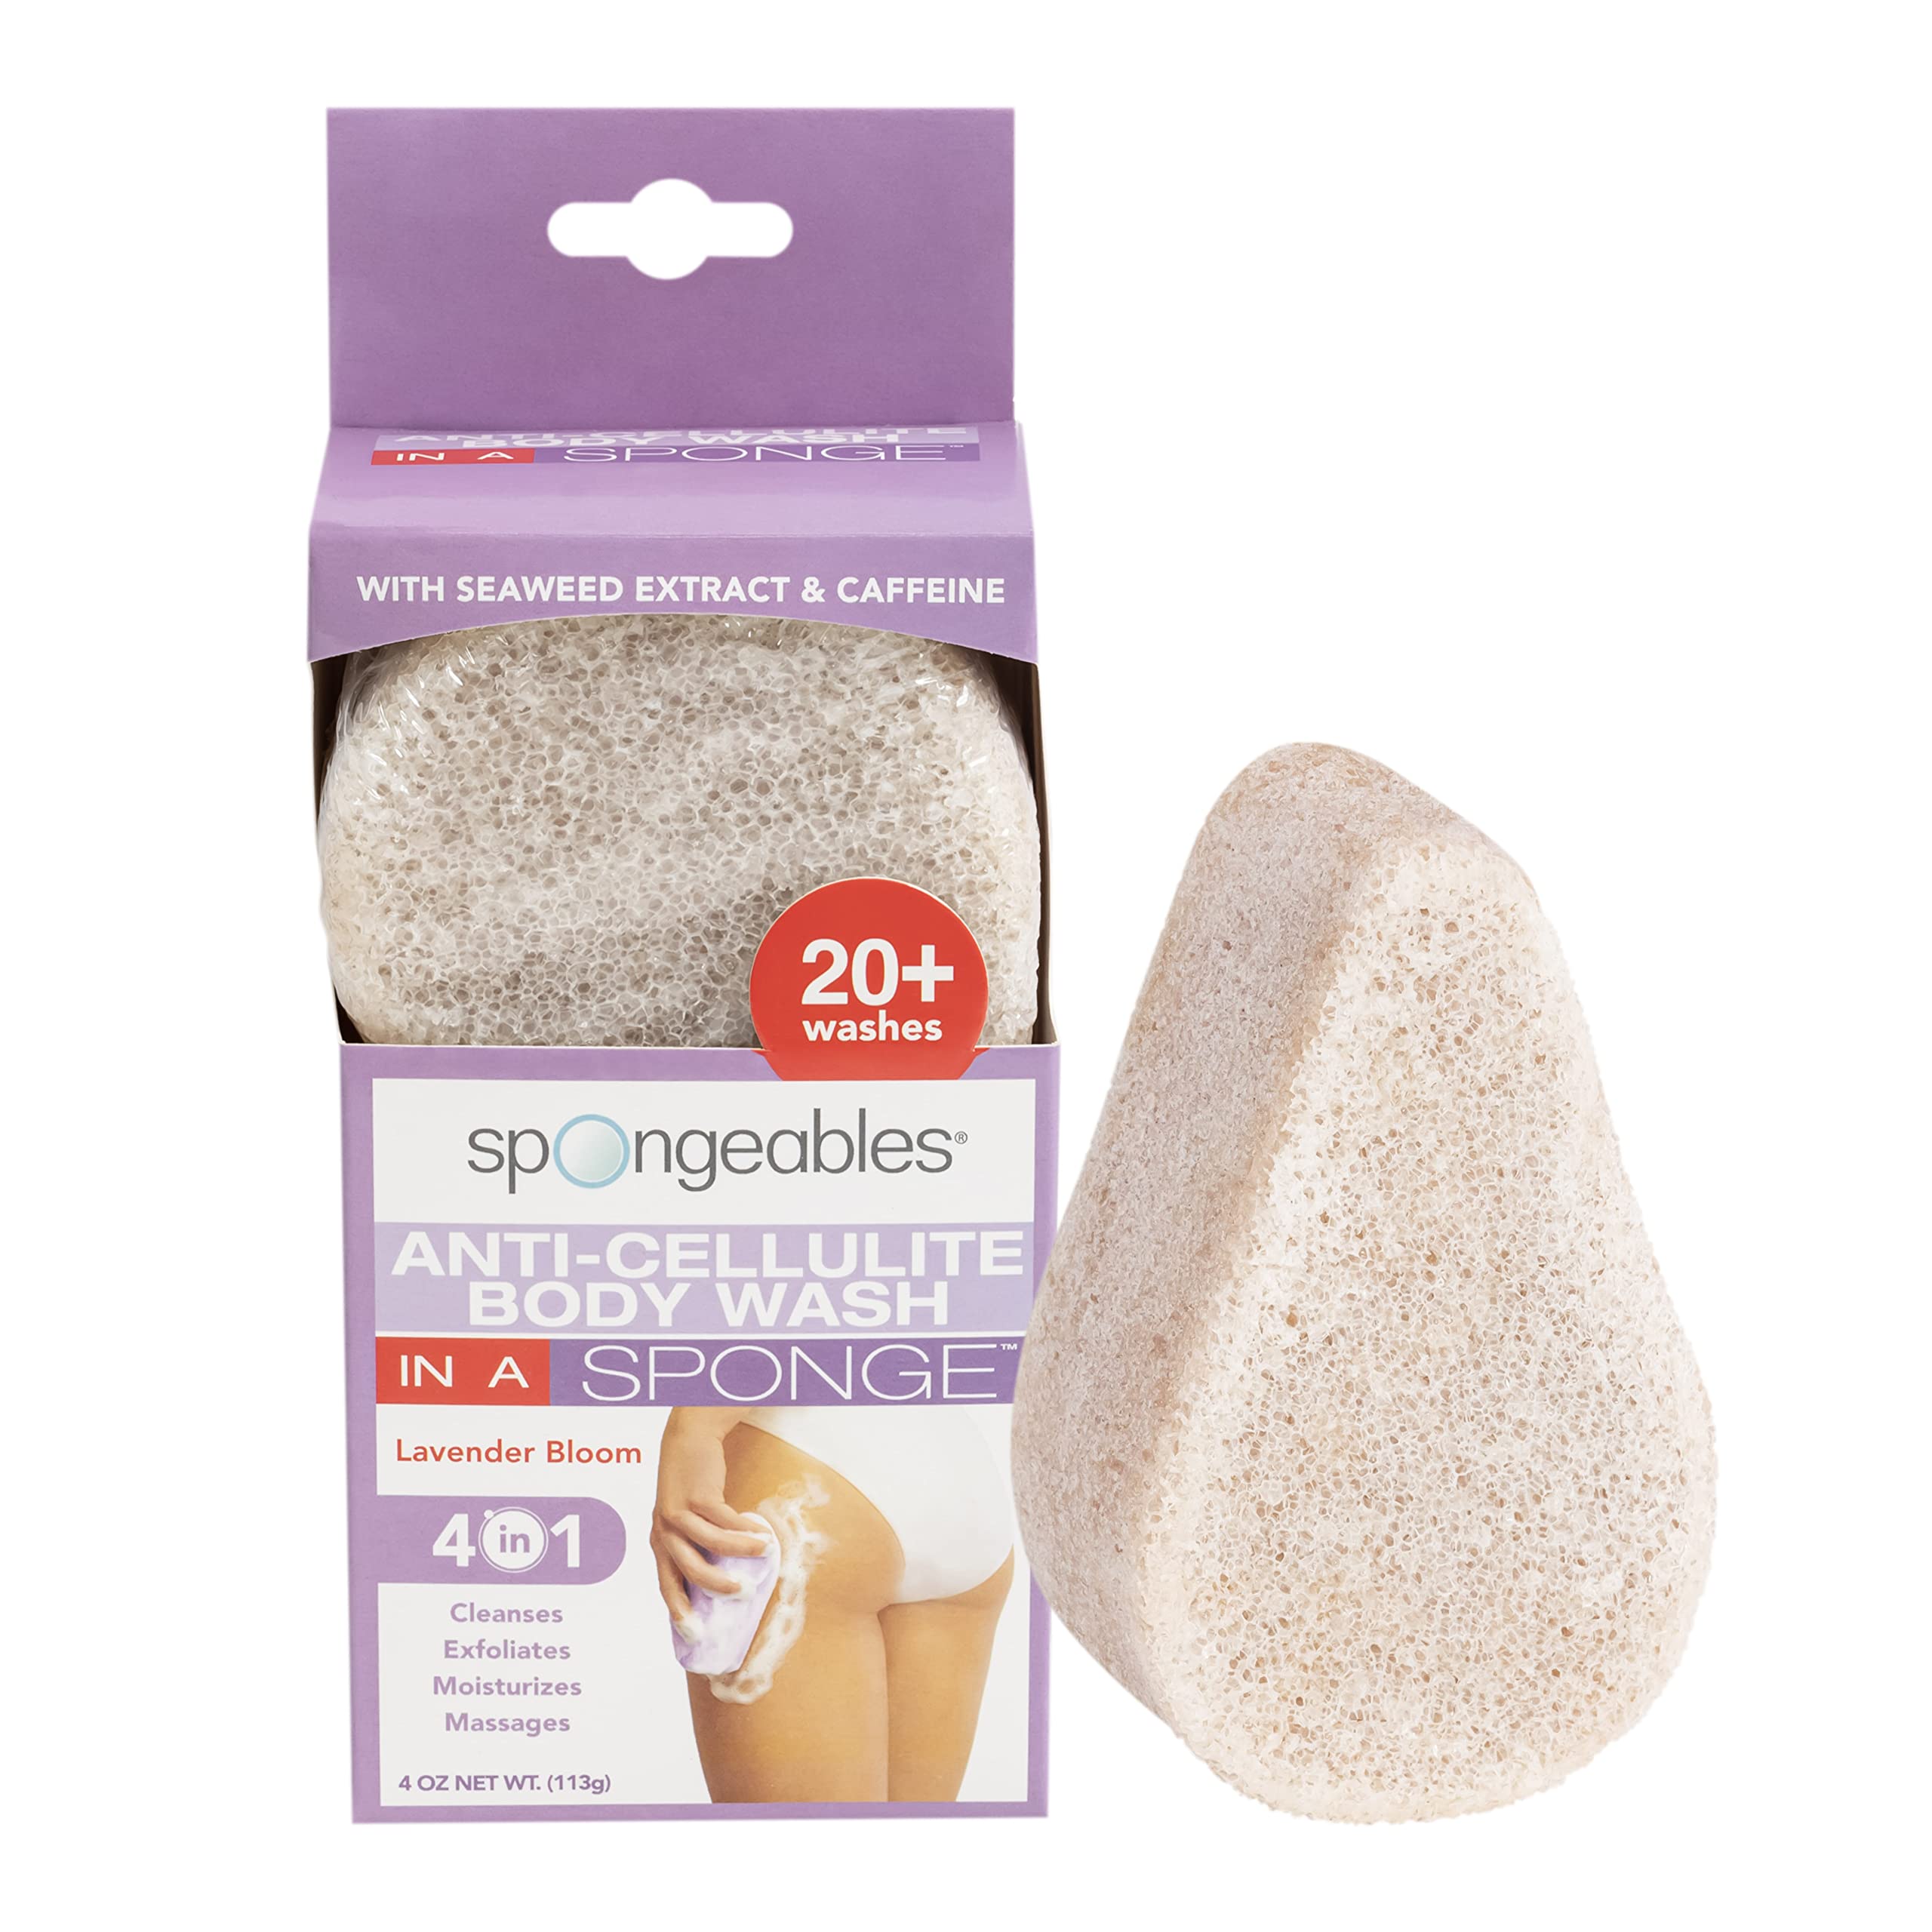 Spongeables Anti-Cellulite Body Wash in a Sponge, Scent, Spa Cellulite Massager, Moisturizer and Exfoliator, 20+ Washes, 4oz Sponge, Lavender, 1 Count